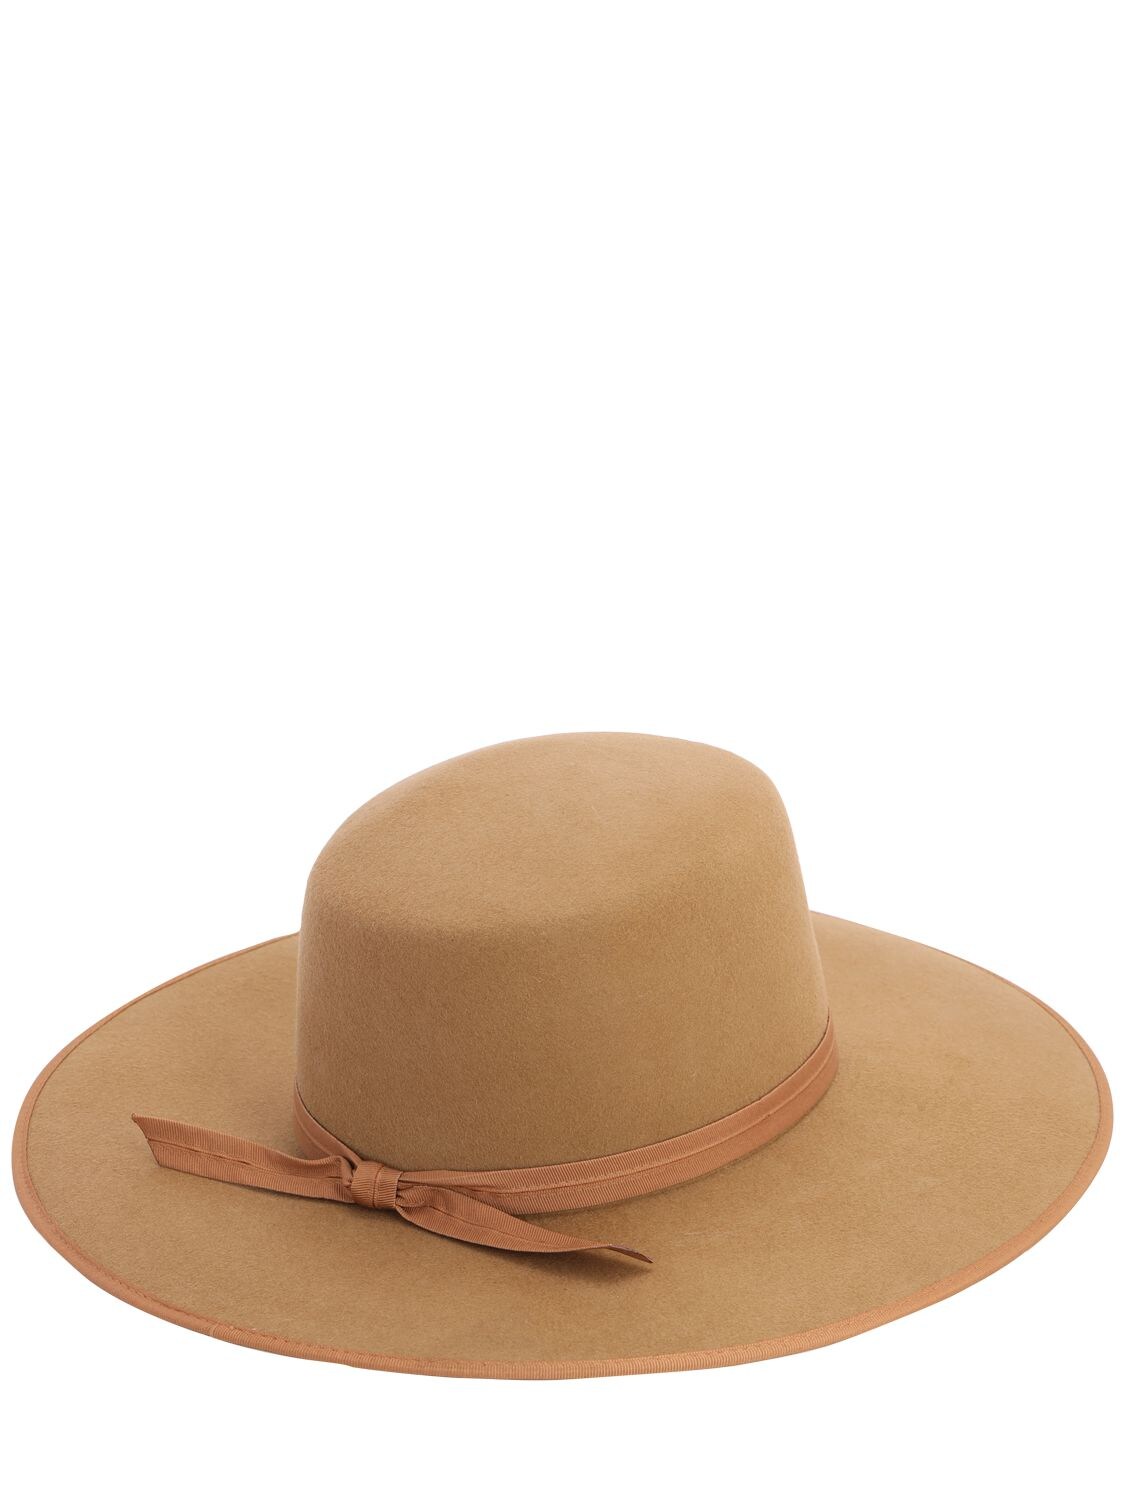 Lack Of Color Felted Wool Rancher Boater Hat In Teak Brown